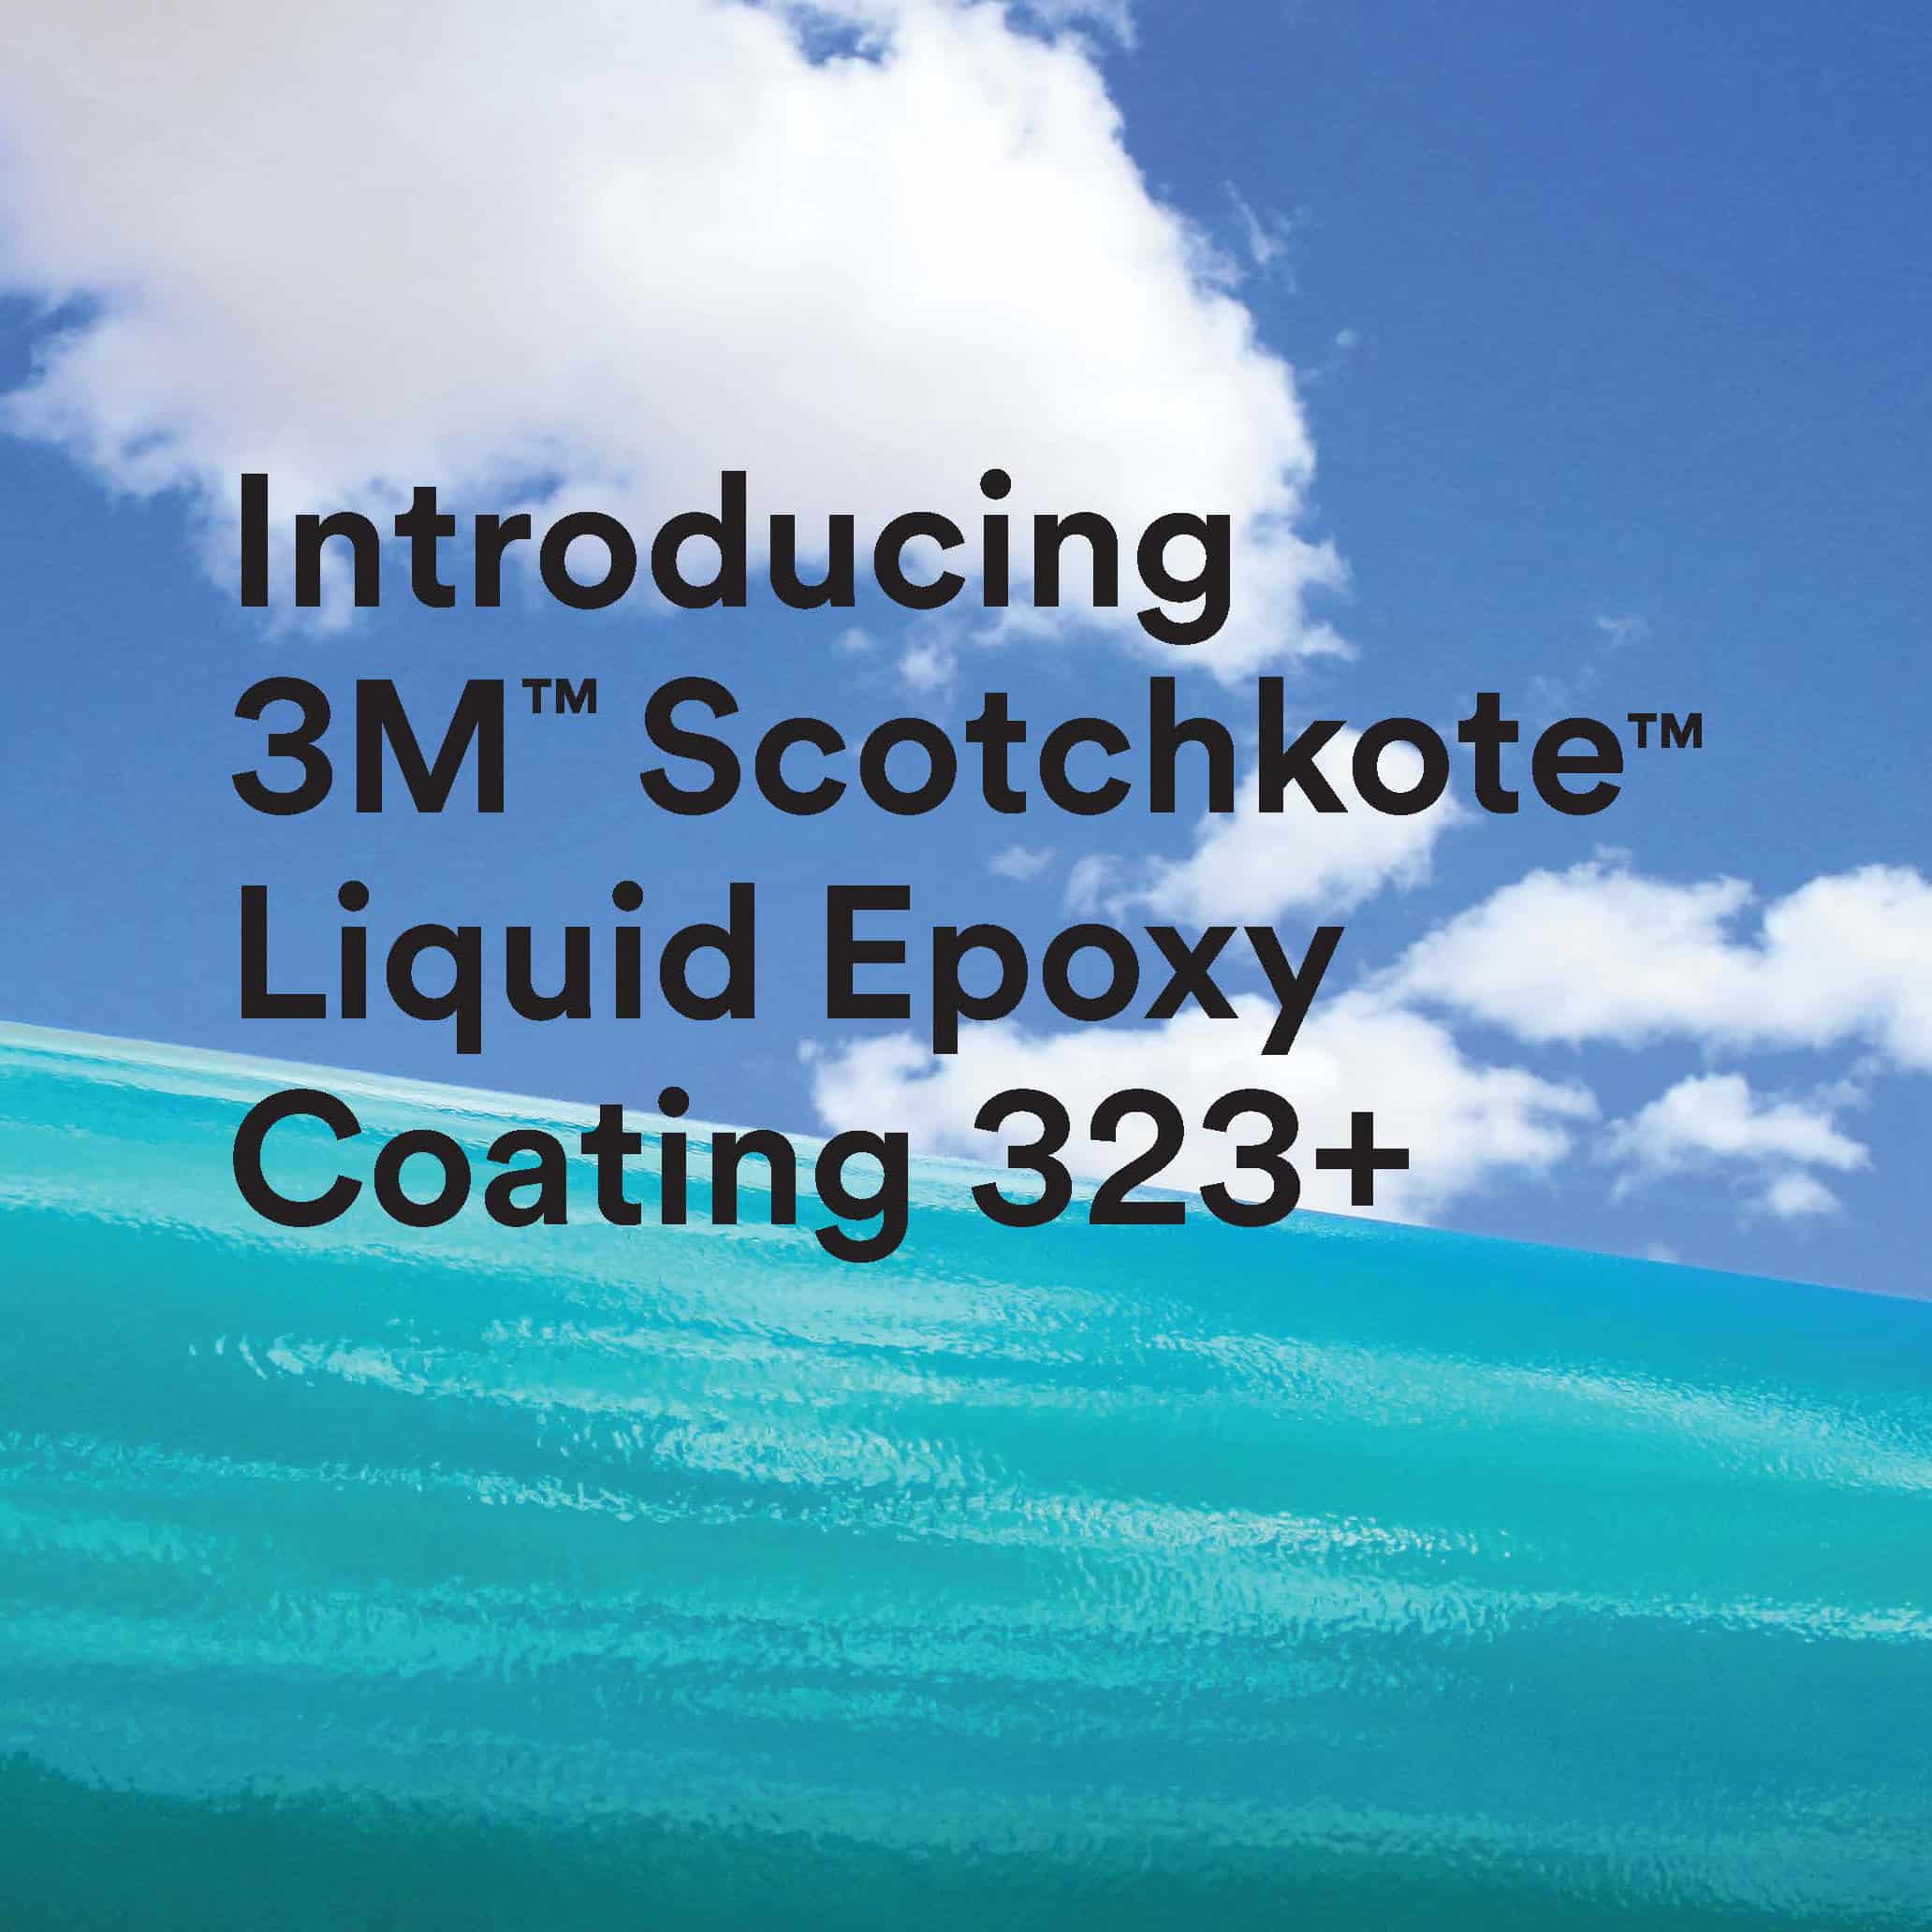 Introducing 3M Scotchkote Liquid Epoxy Coating 323+